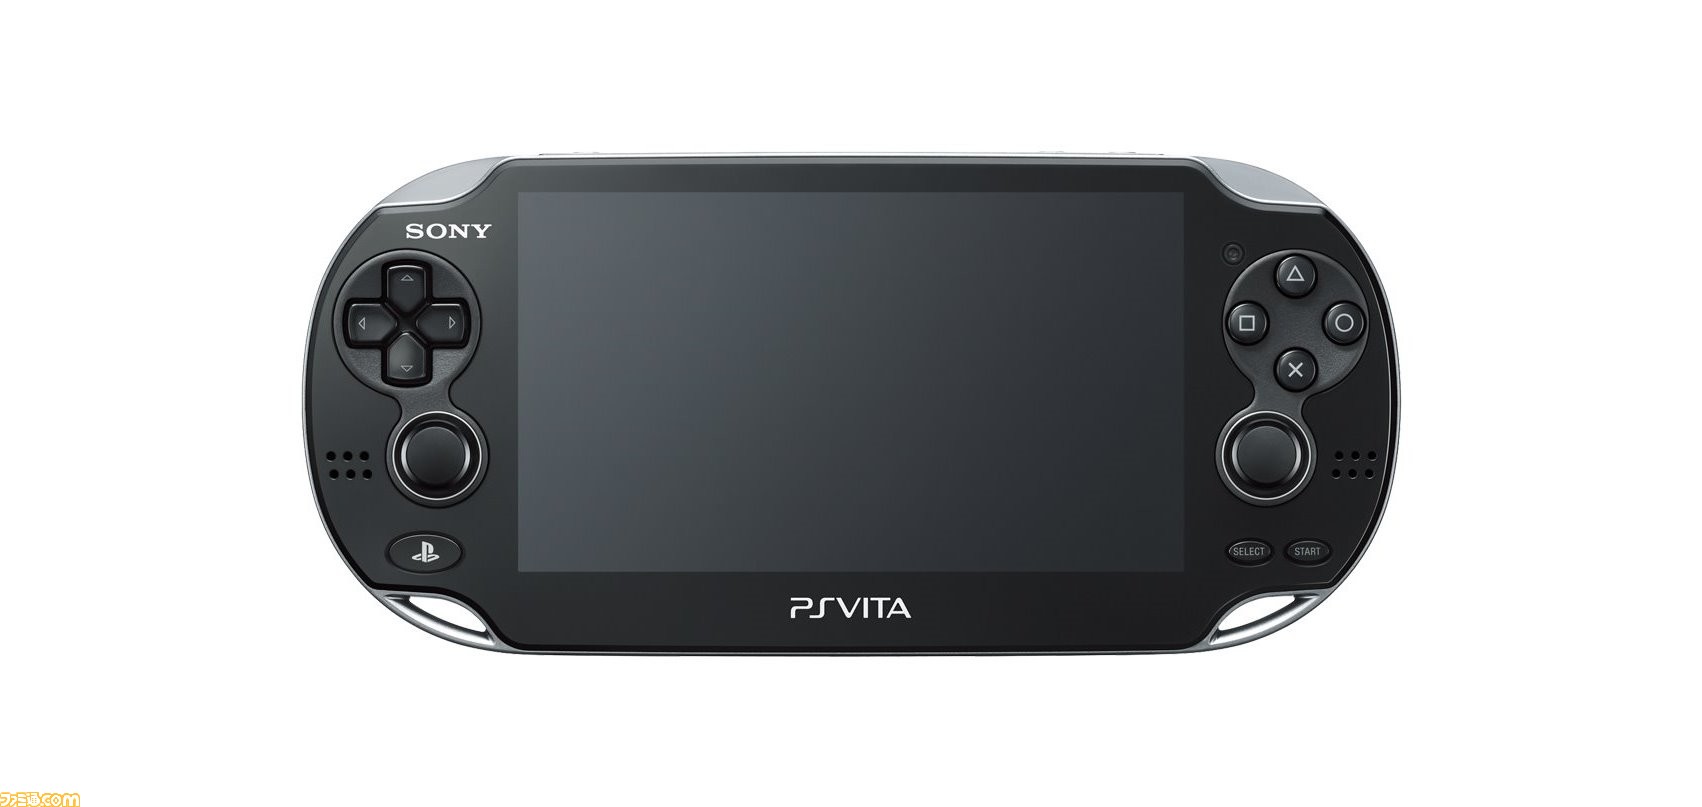 PS Vitaが発売された日。有機ELディスプレイや3G回線、加速度 ...